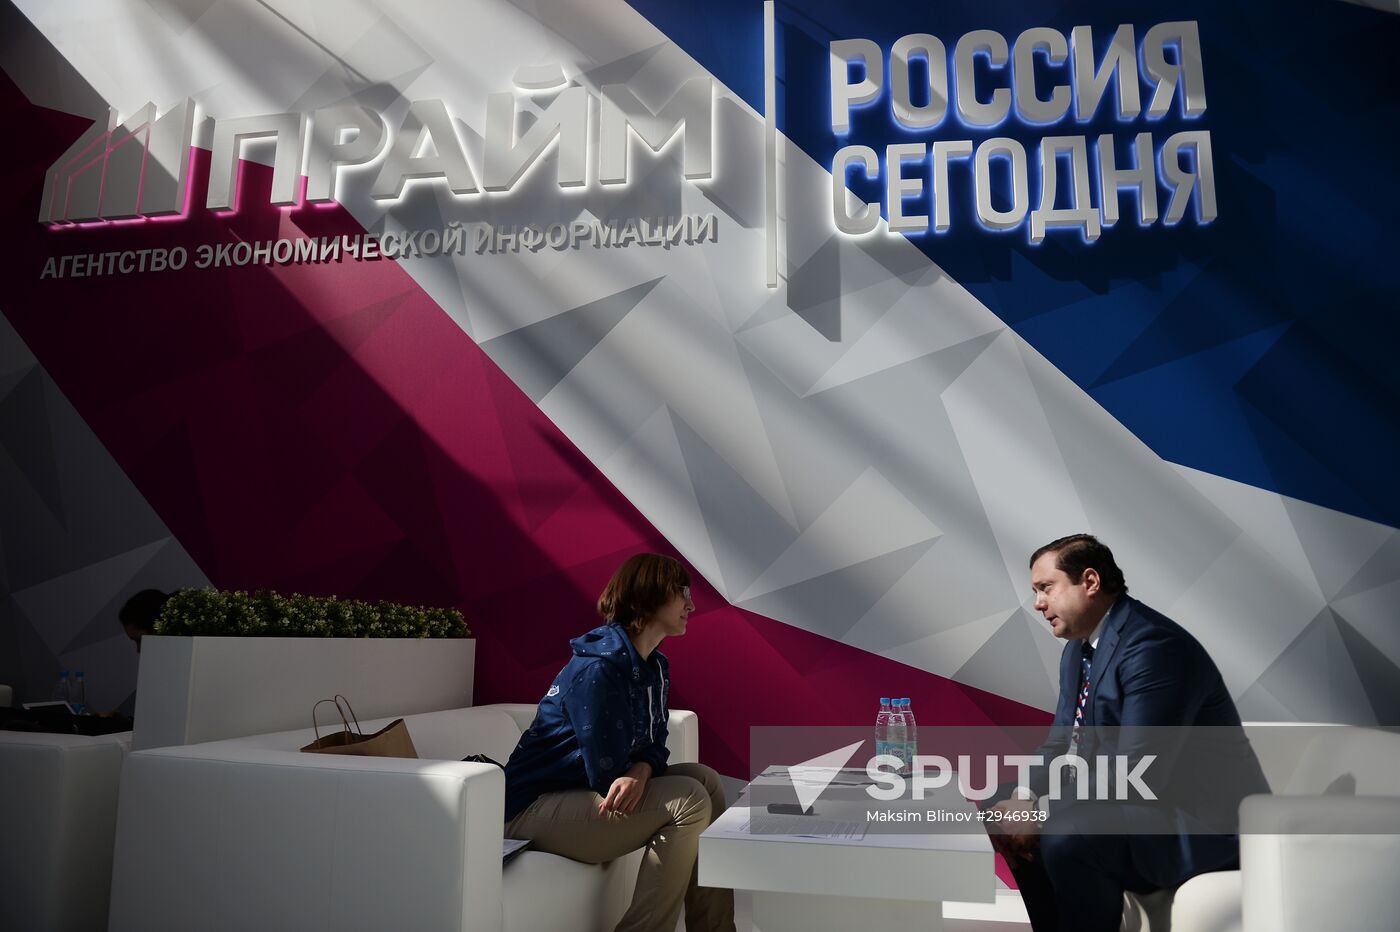 Sochi International Investment Forum 2016